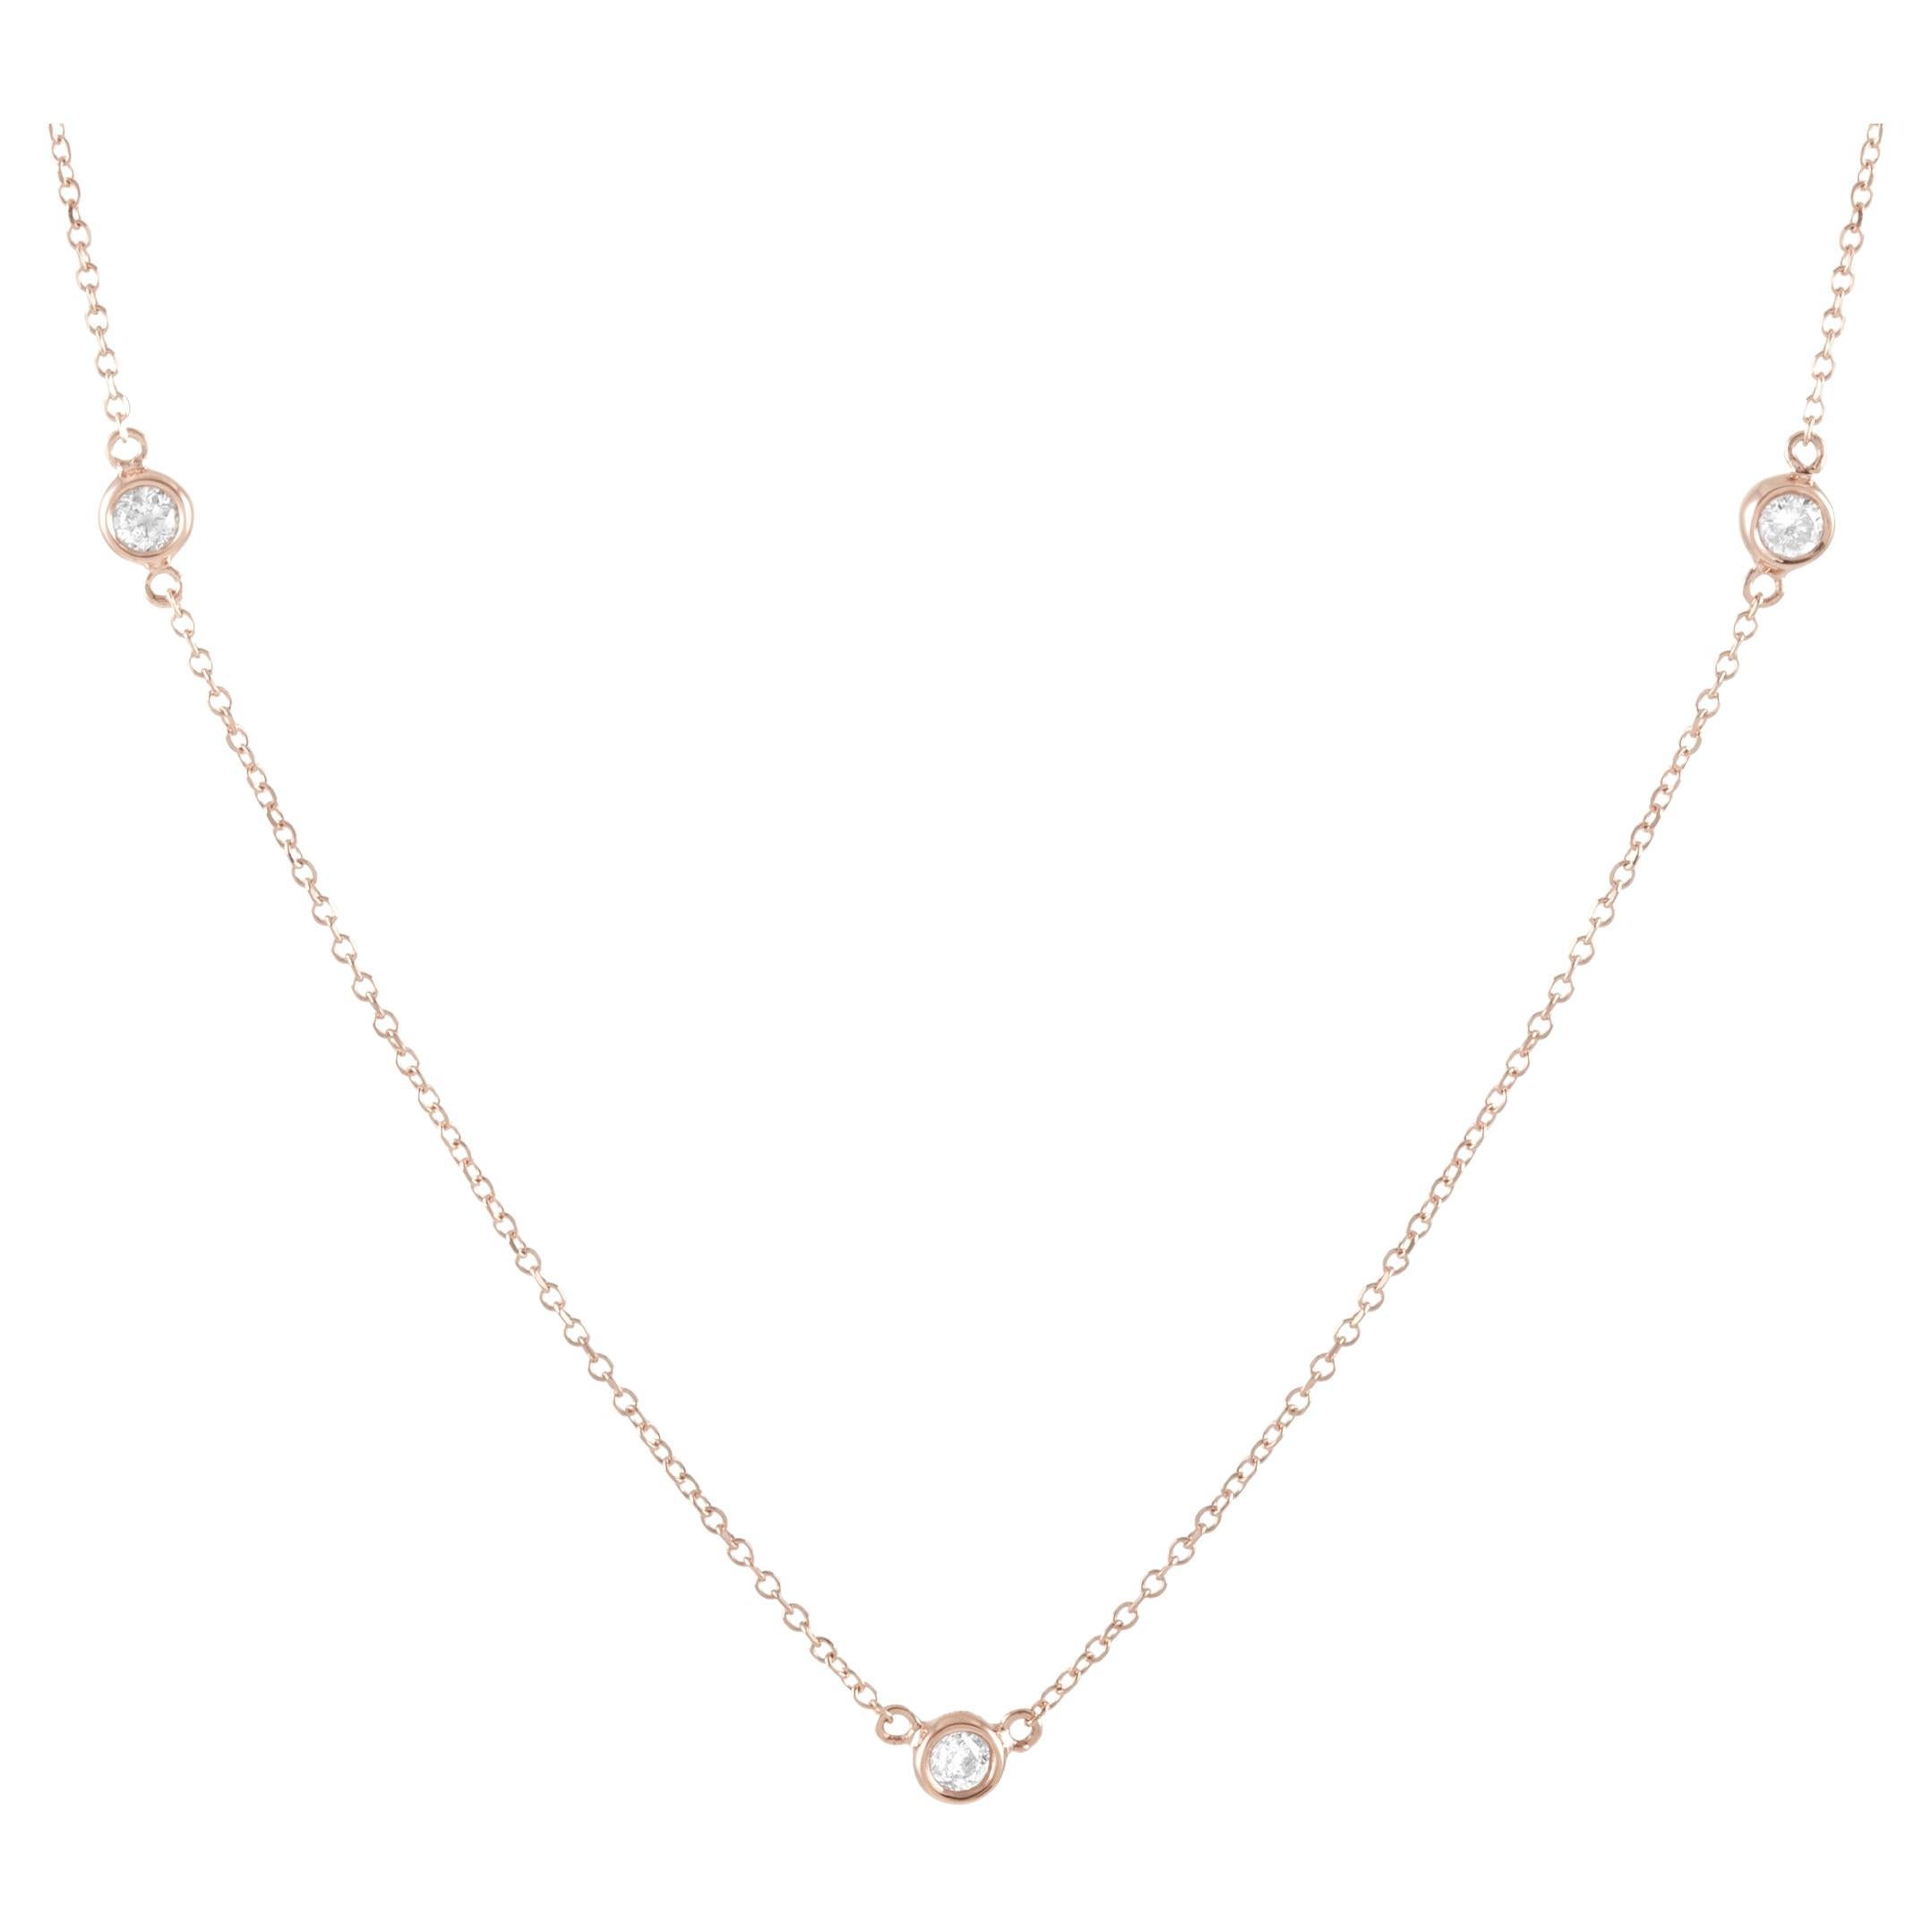 Lb Exclusive 14k Rose Gold 0.15 Carat Diamond Necklace For Sale